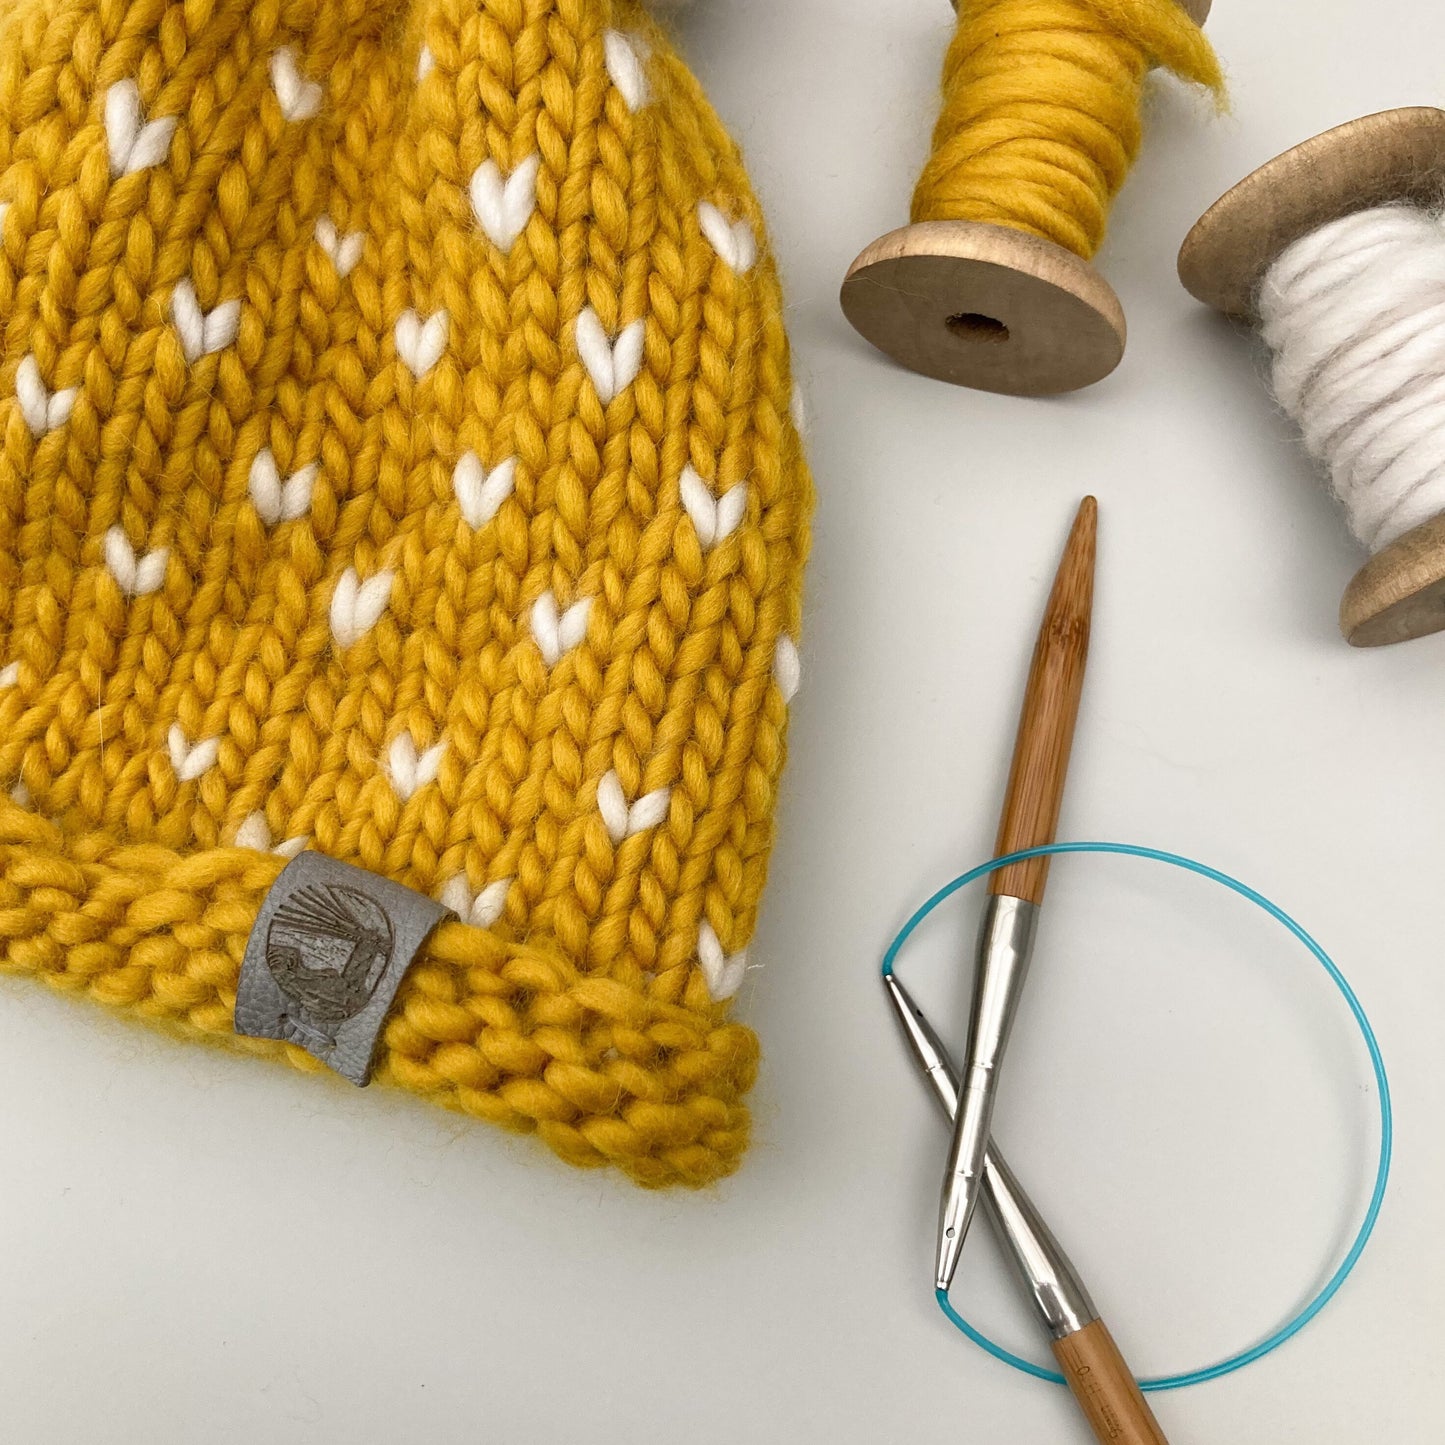 Bobble Hat | adult size | mustard yellow heart spot | merino wool handknit hat